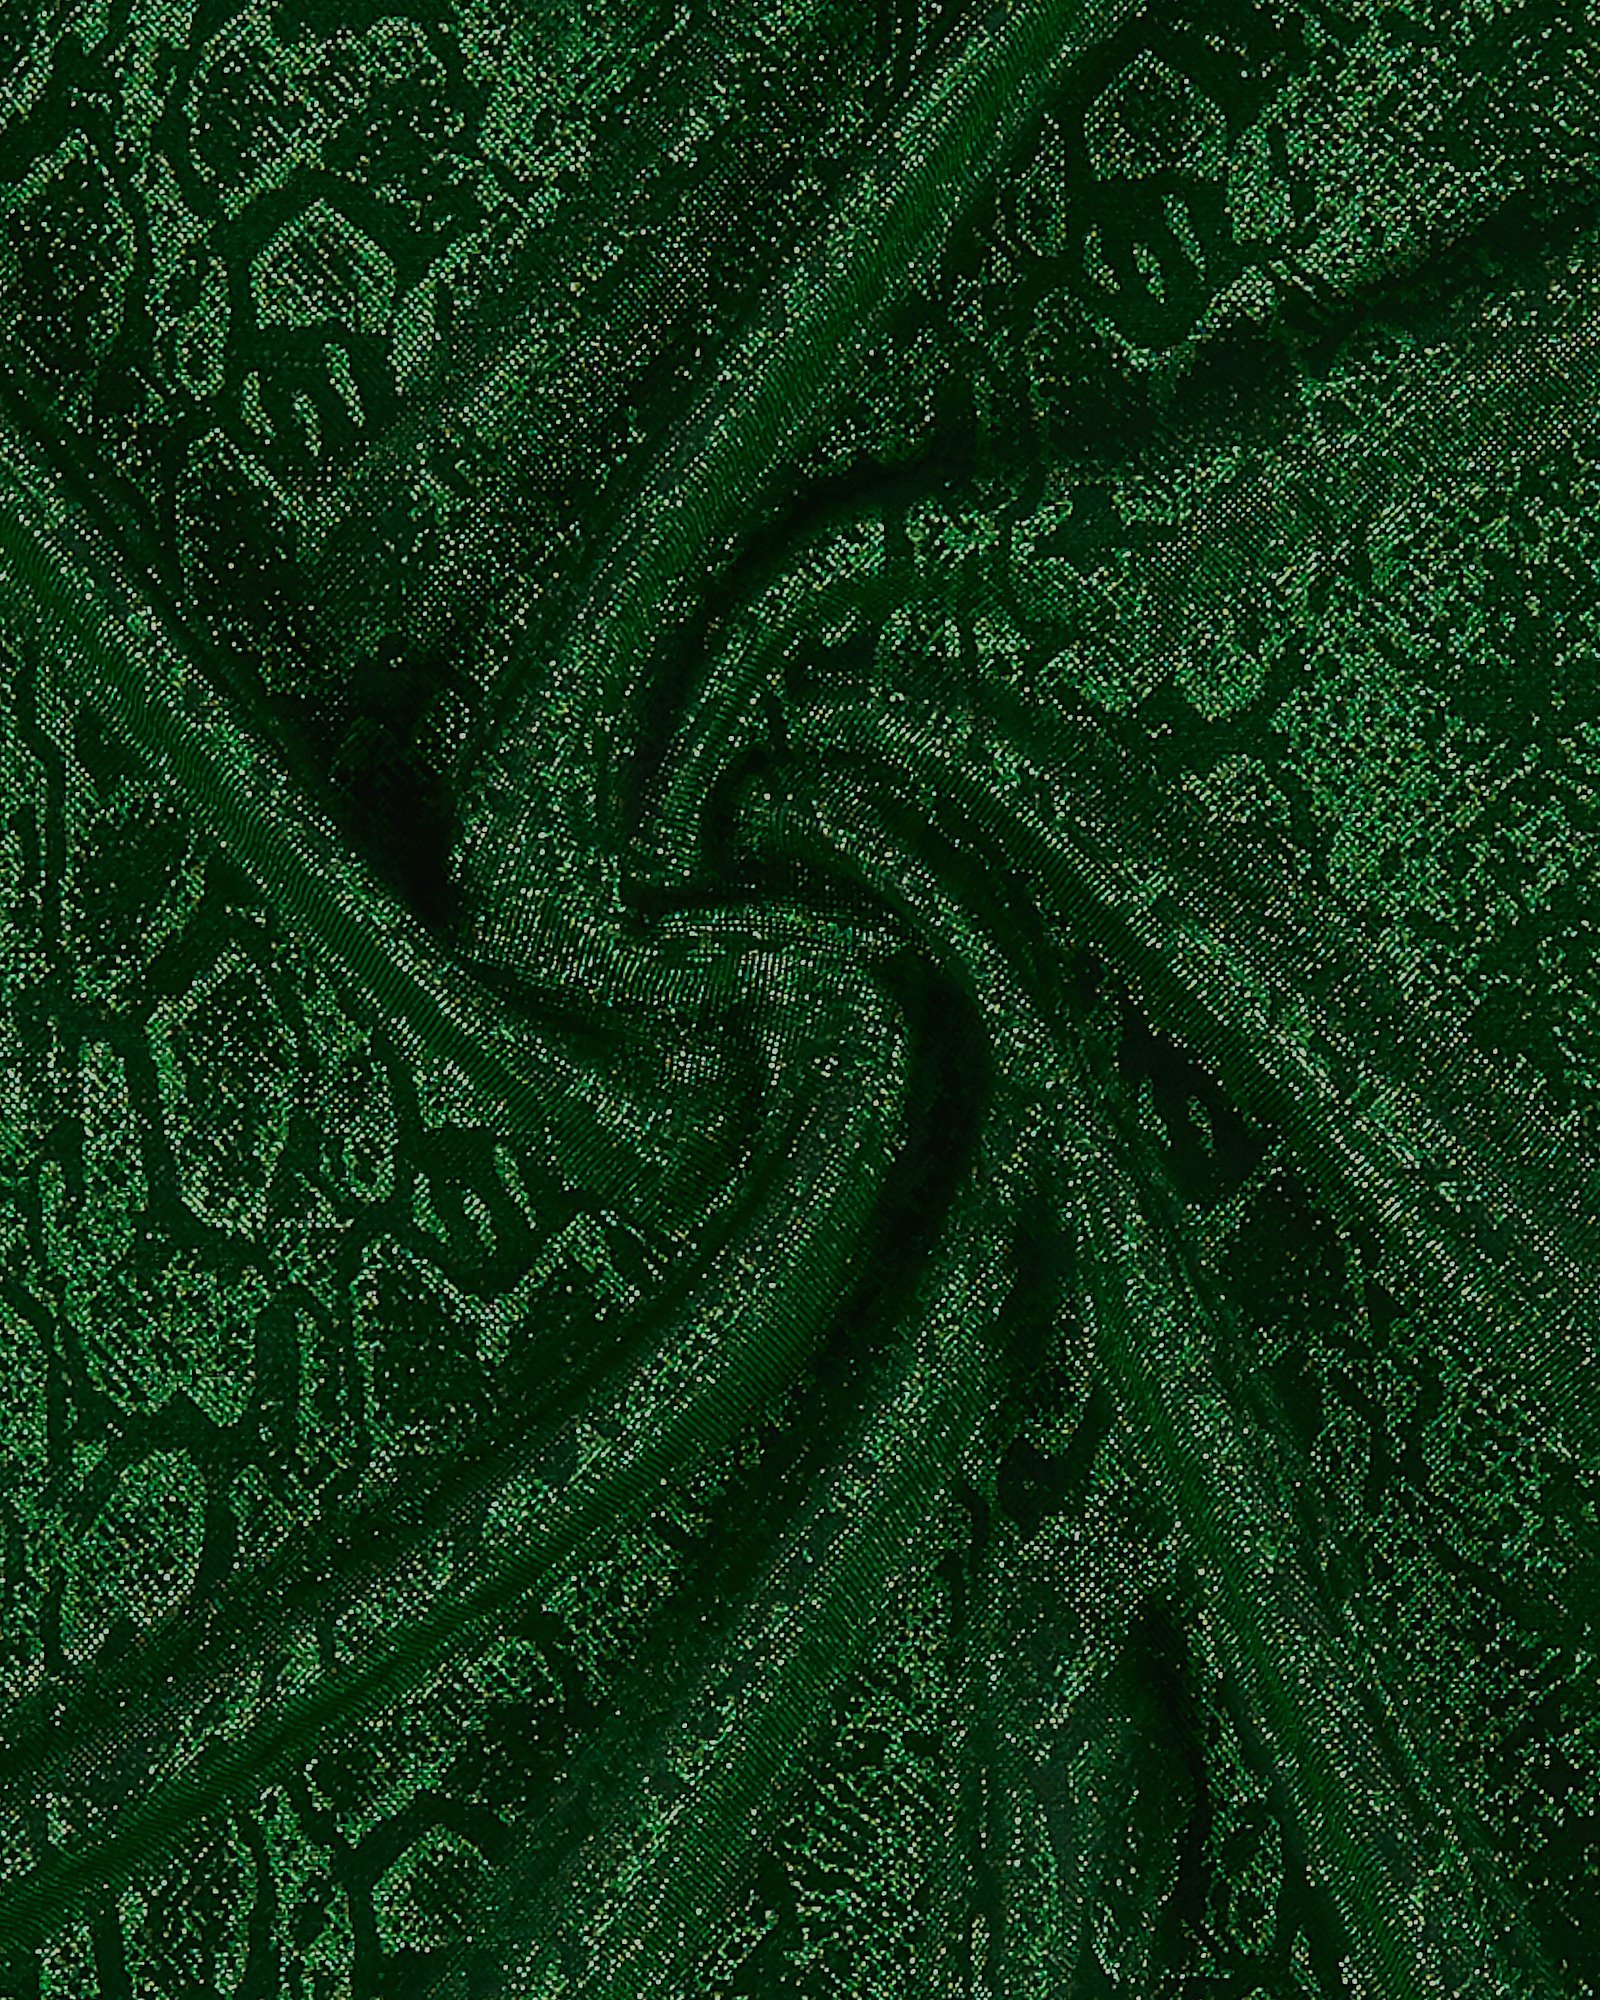 Light str jersey green w snakeskin lurex 273090_pack